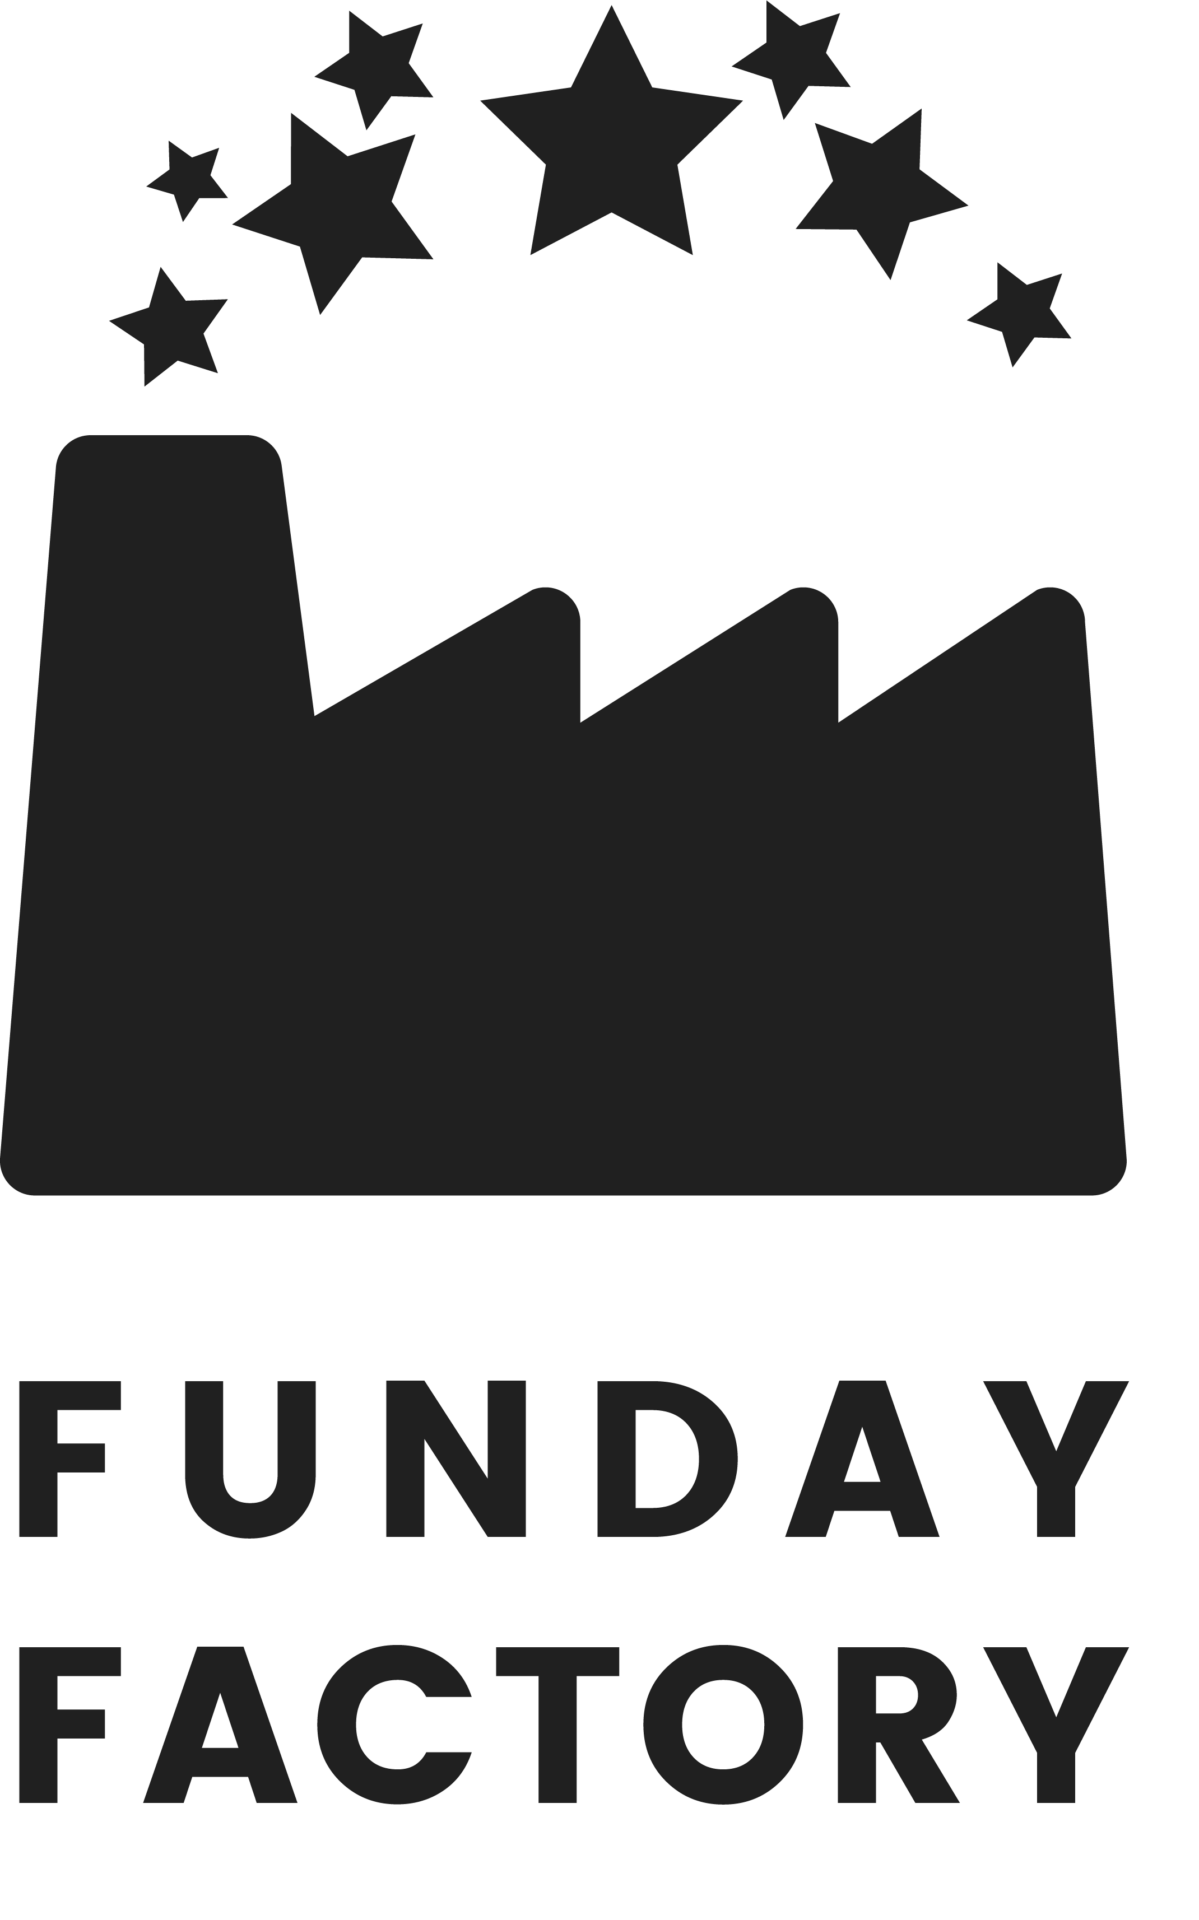 Funday Factory-logo